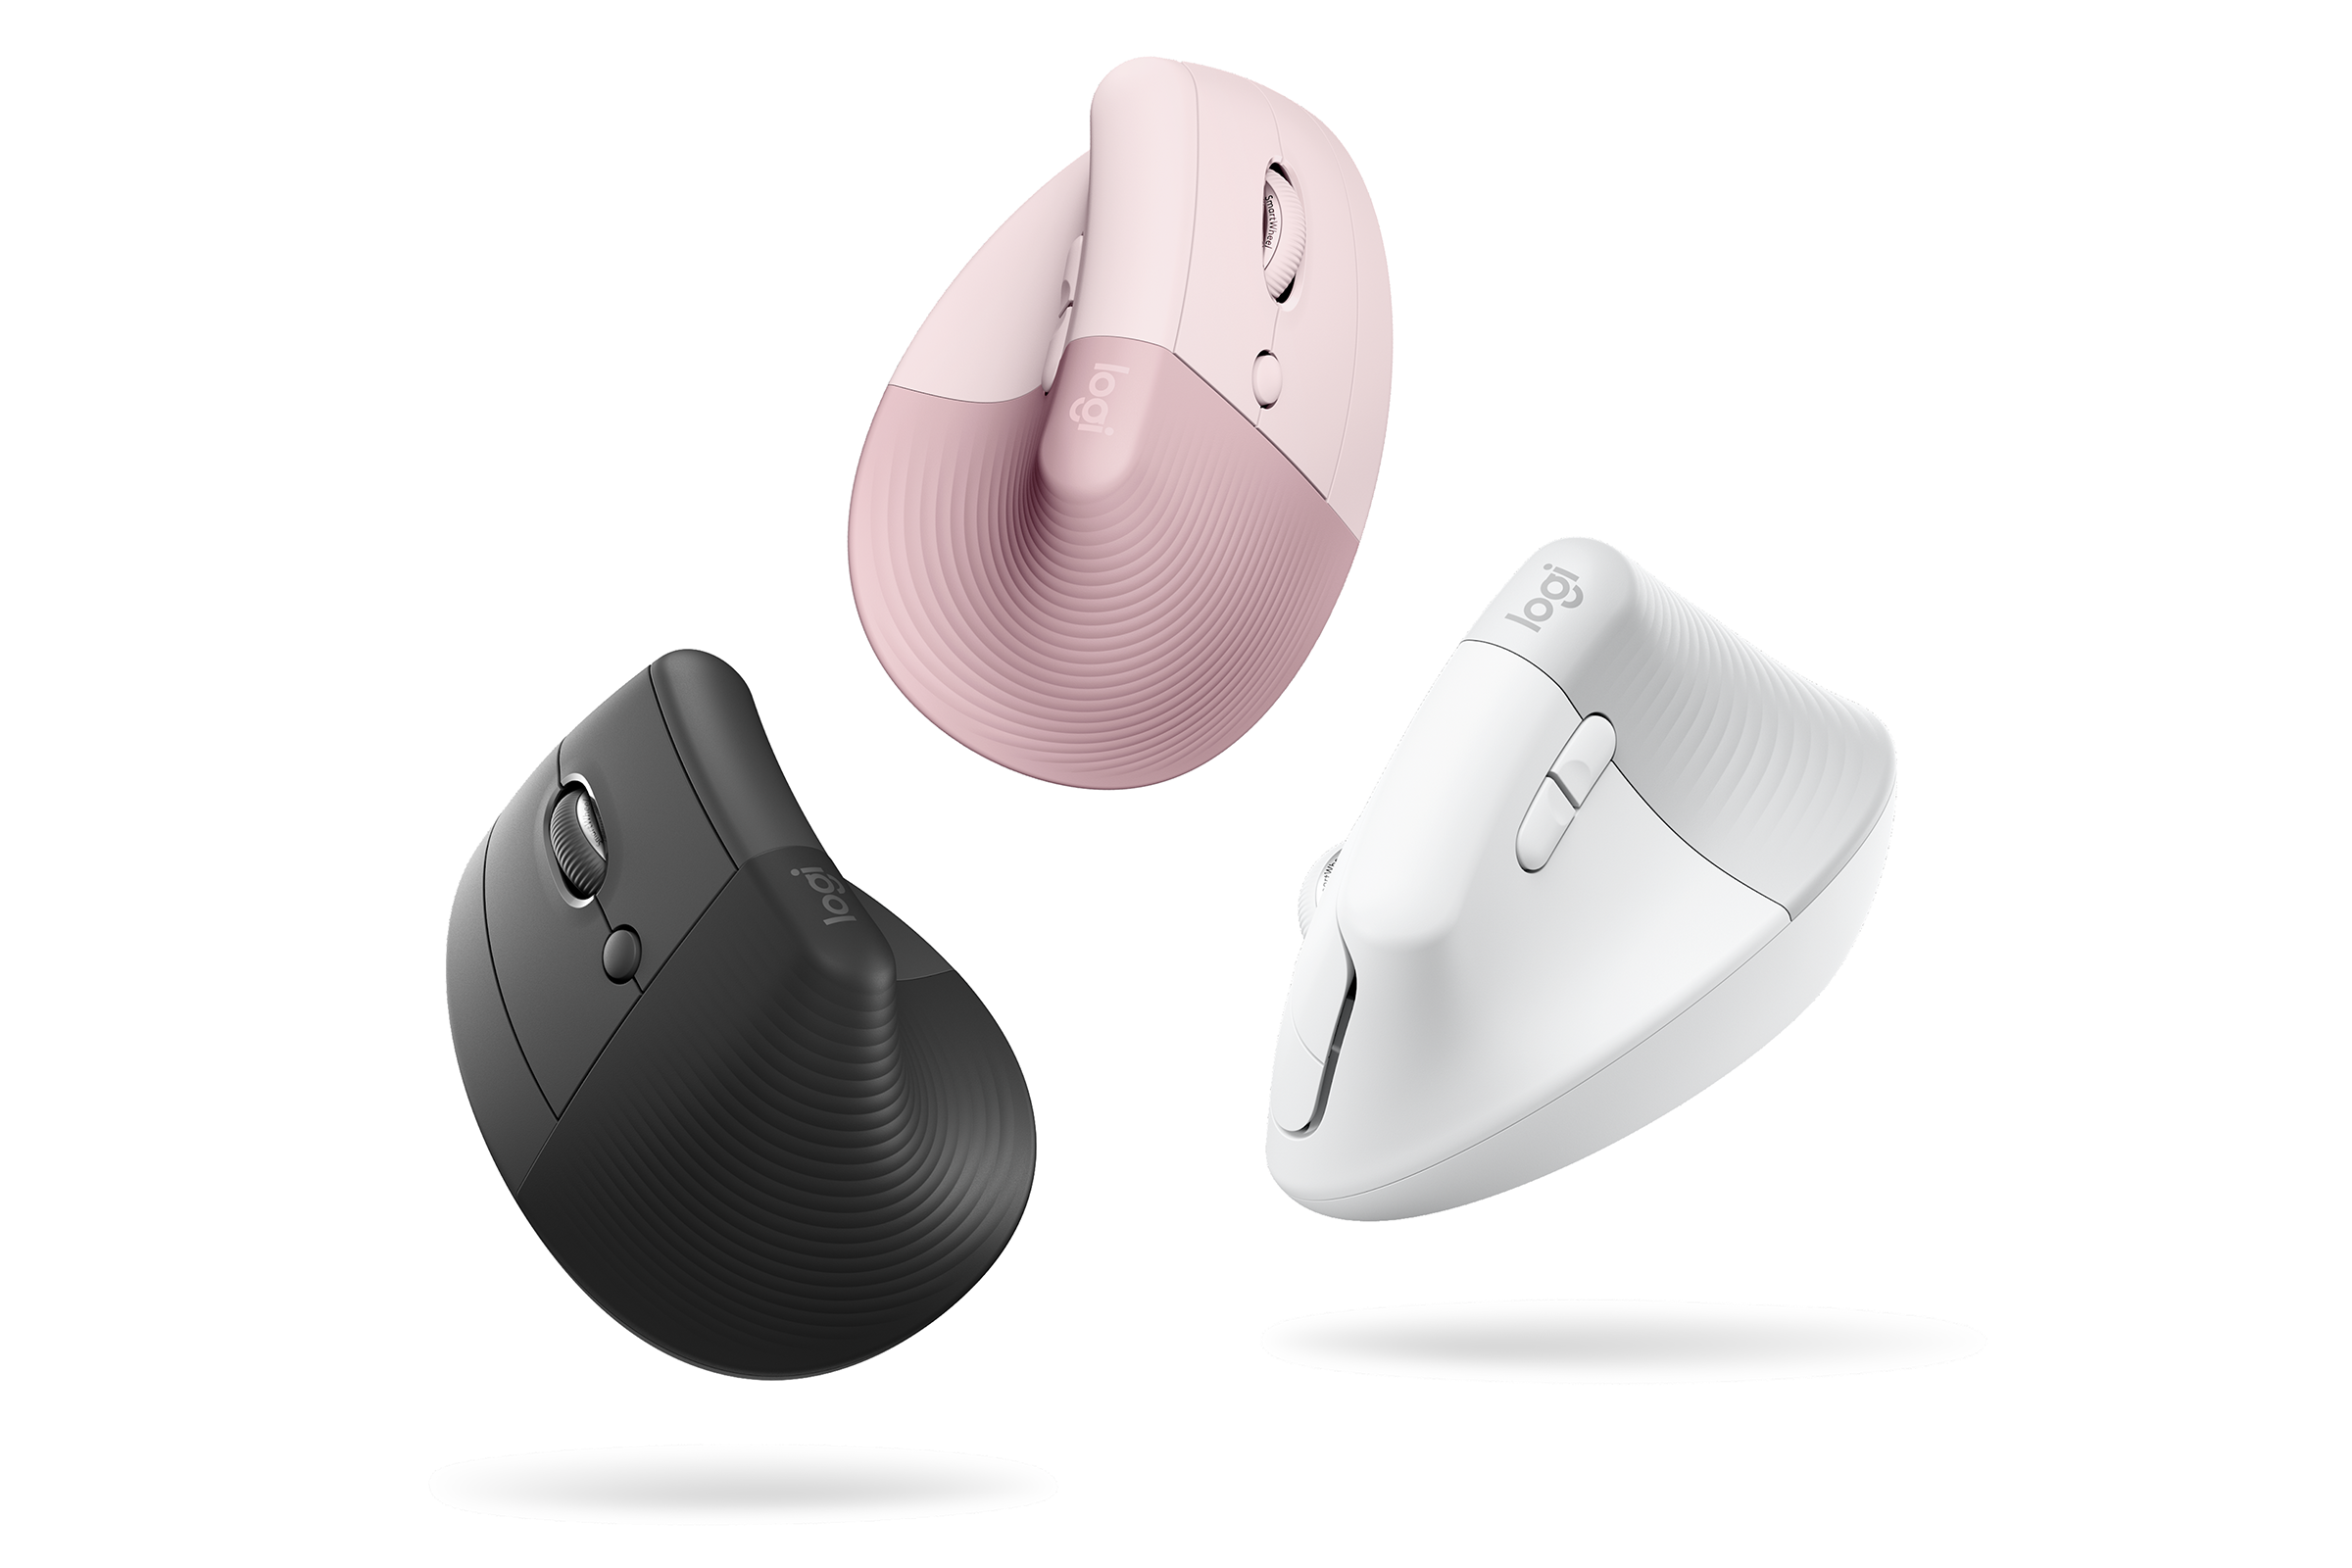 Logitech Lift - Best ergonomic wireless mouse for lefties